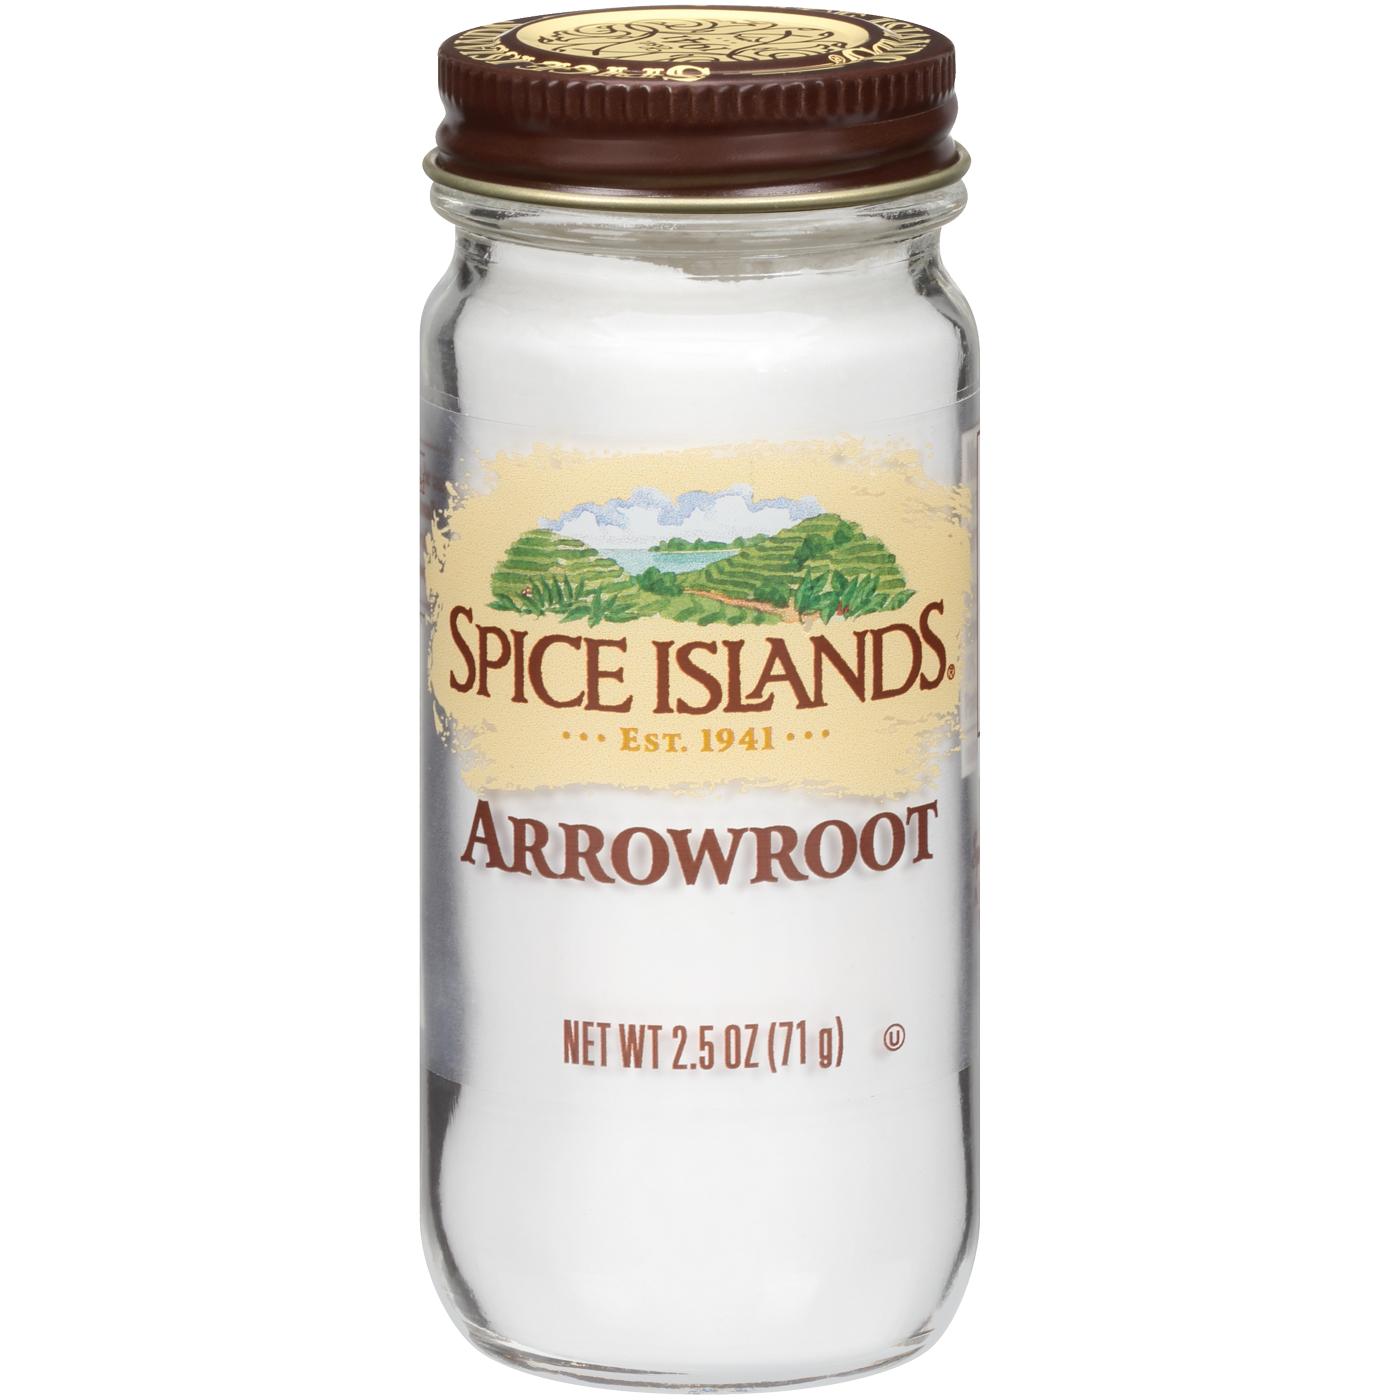 Spice Islands Arrowroot ; image 1 of 2